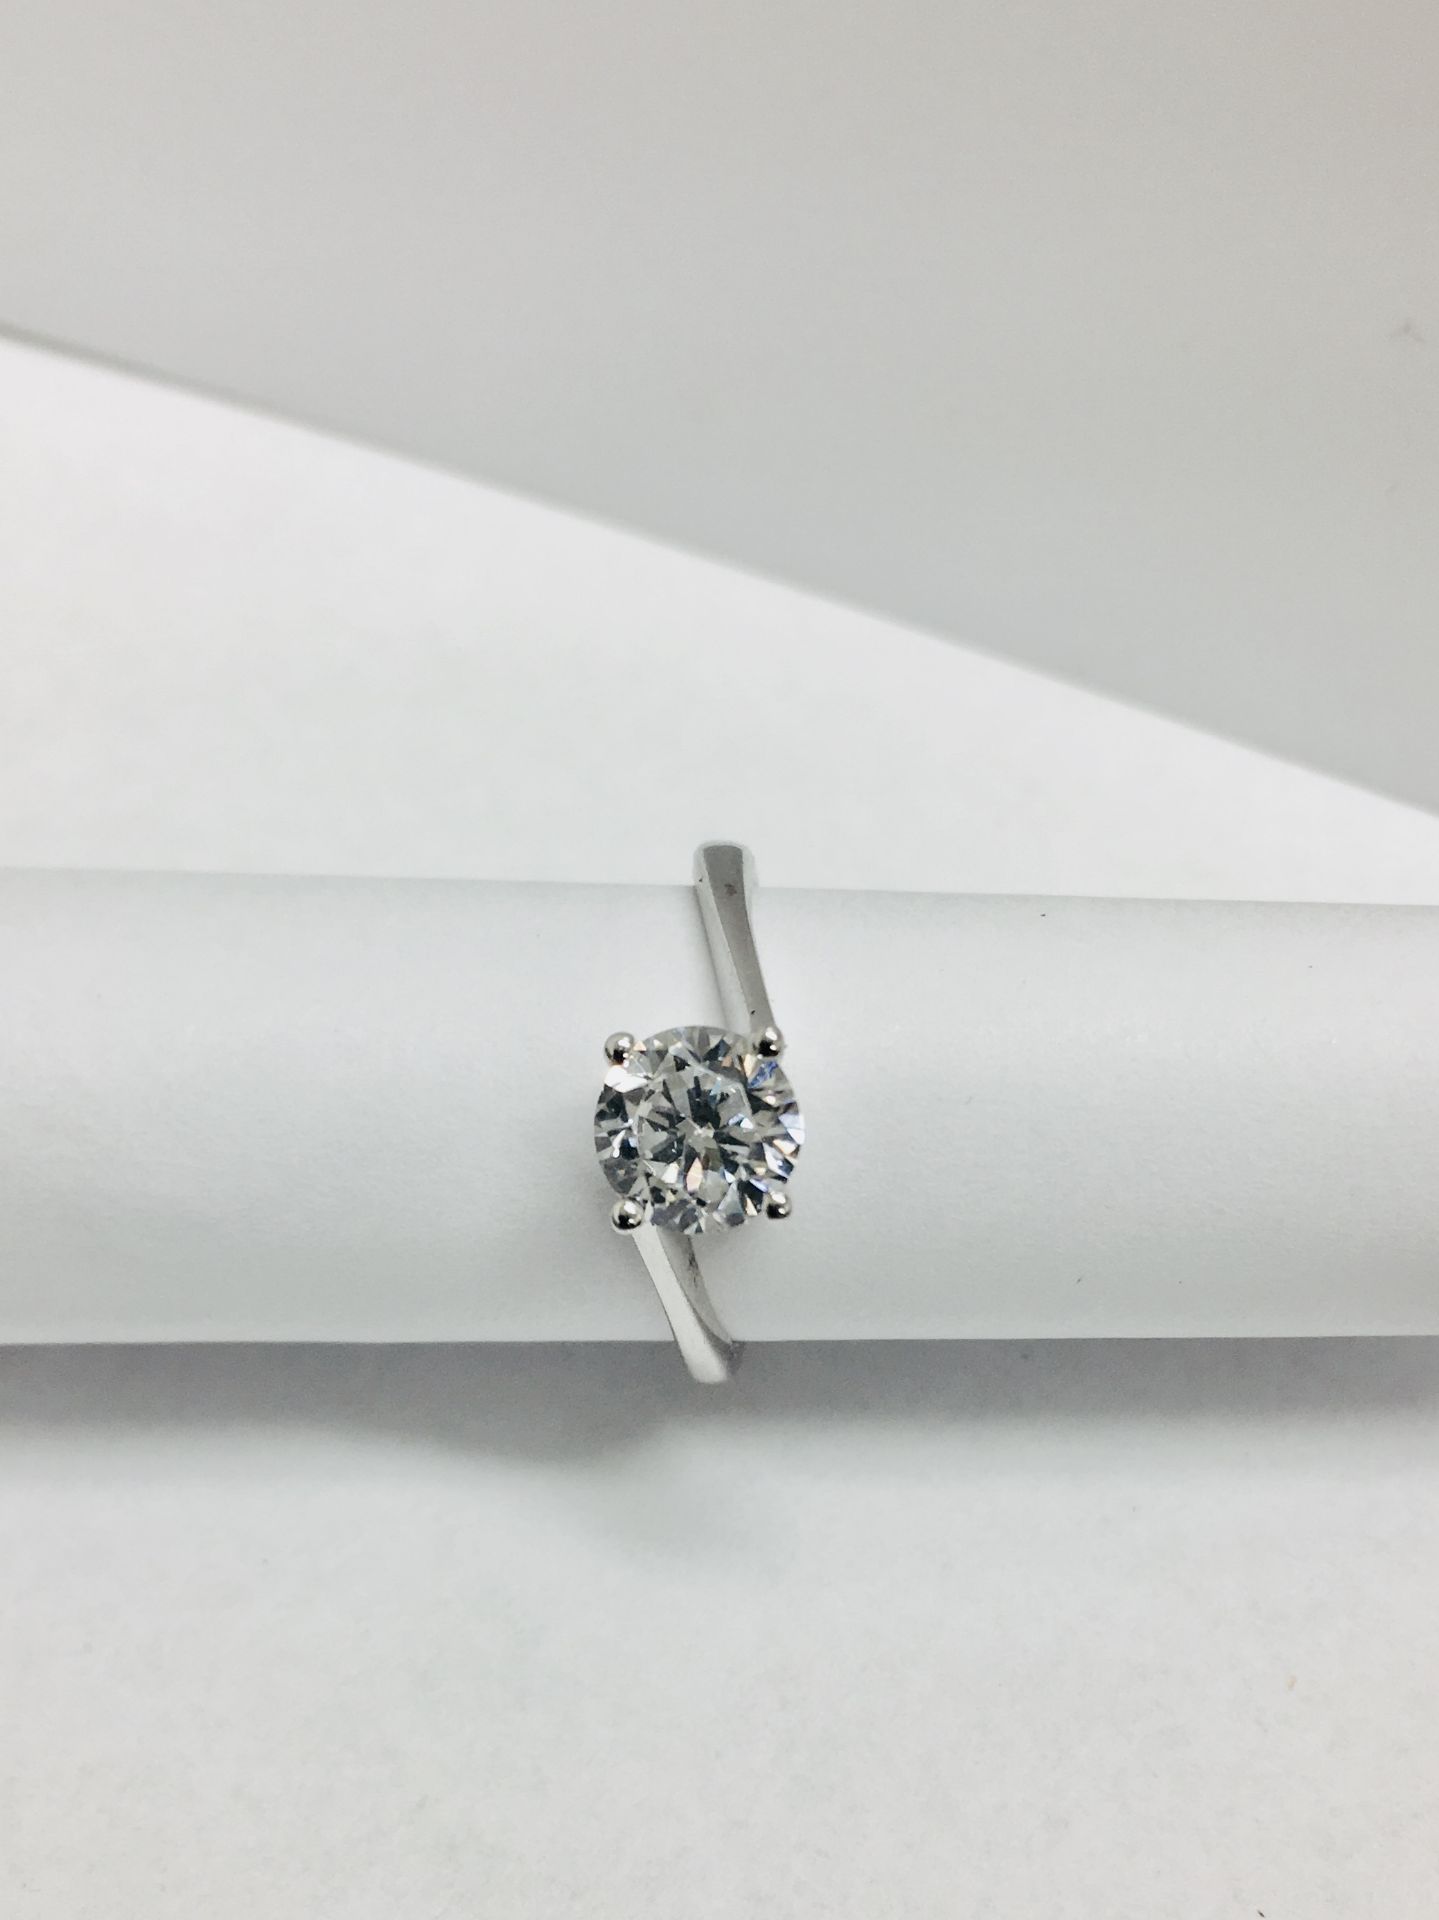 platinum twist solitaire ring,0.50ct brilliant cut diamond vs clarity H colour(clarity enhanced), - Image 4 of 4